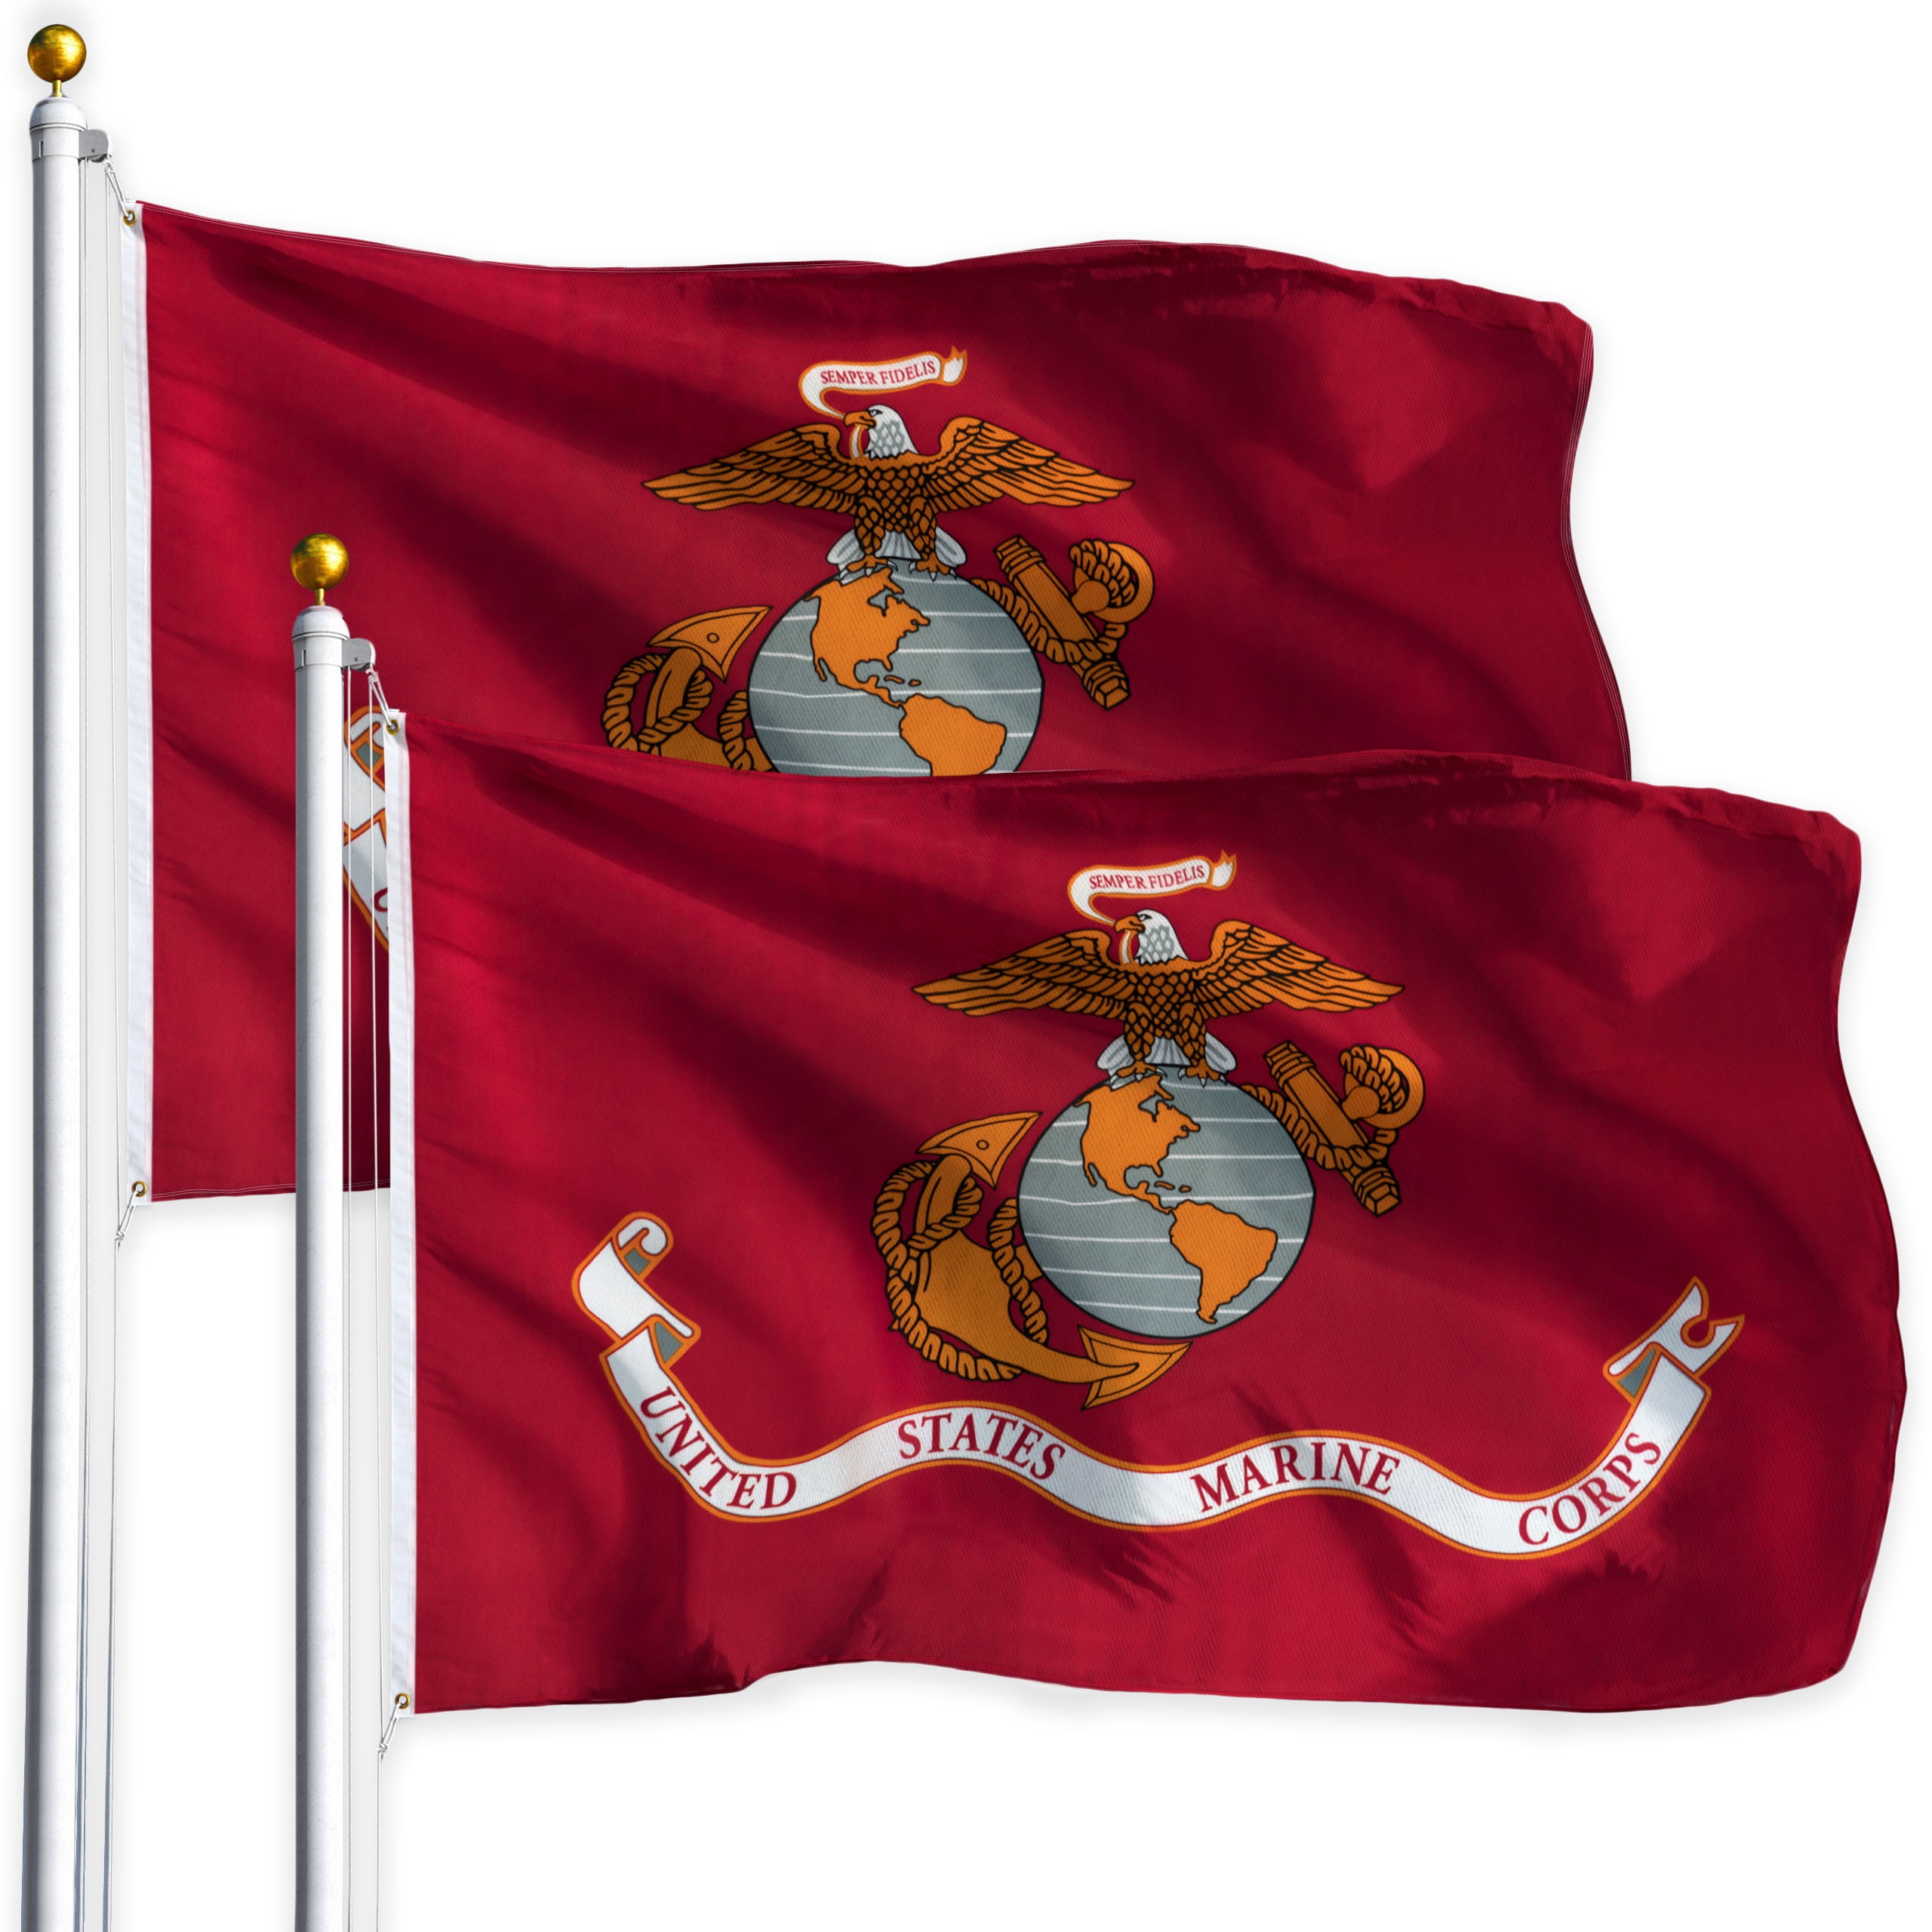 WHOLESALE 2 FLAGS UNITED STATES MARINE CORPS FLAG 3 X 5 USMC AND AMERICAN USA 